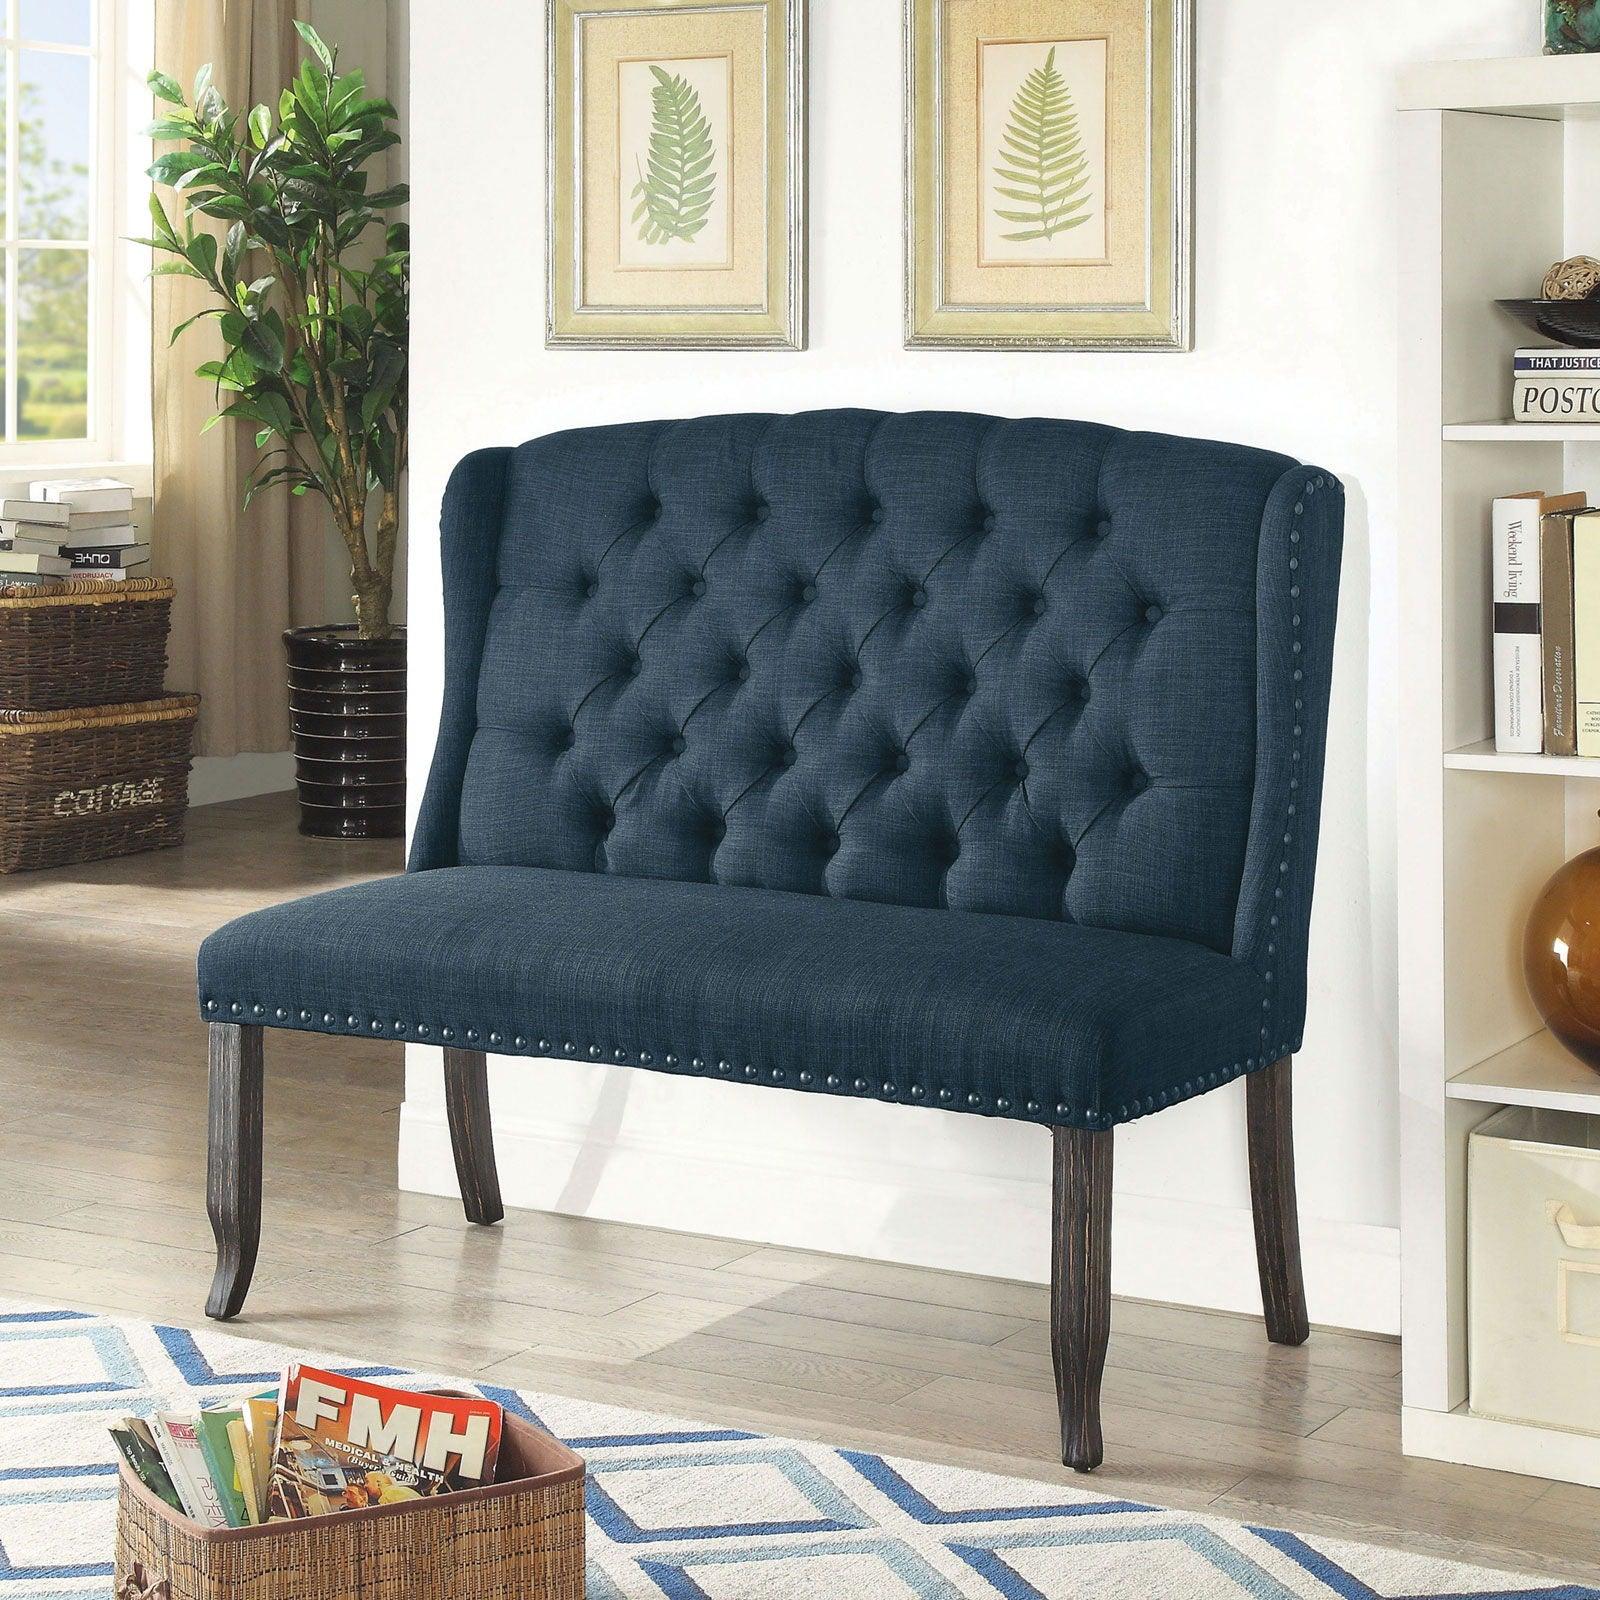 Furniture of America - Sania - 2 Seater Loveseat Bench - Antique Black / Blue - 5th Avenue Furniture